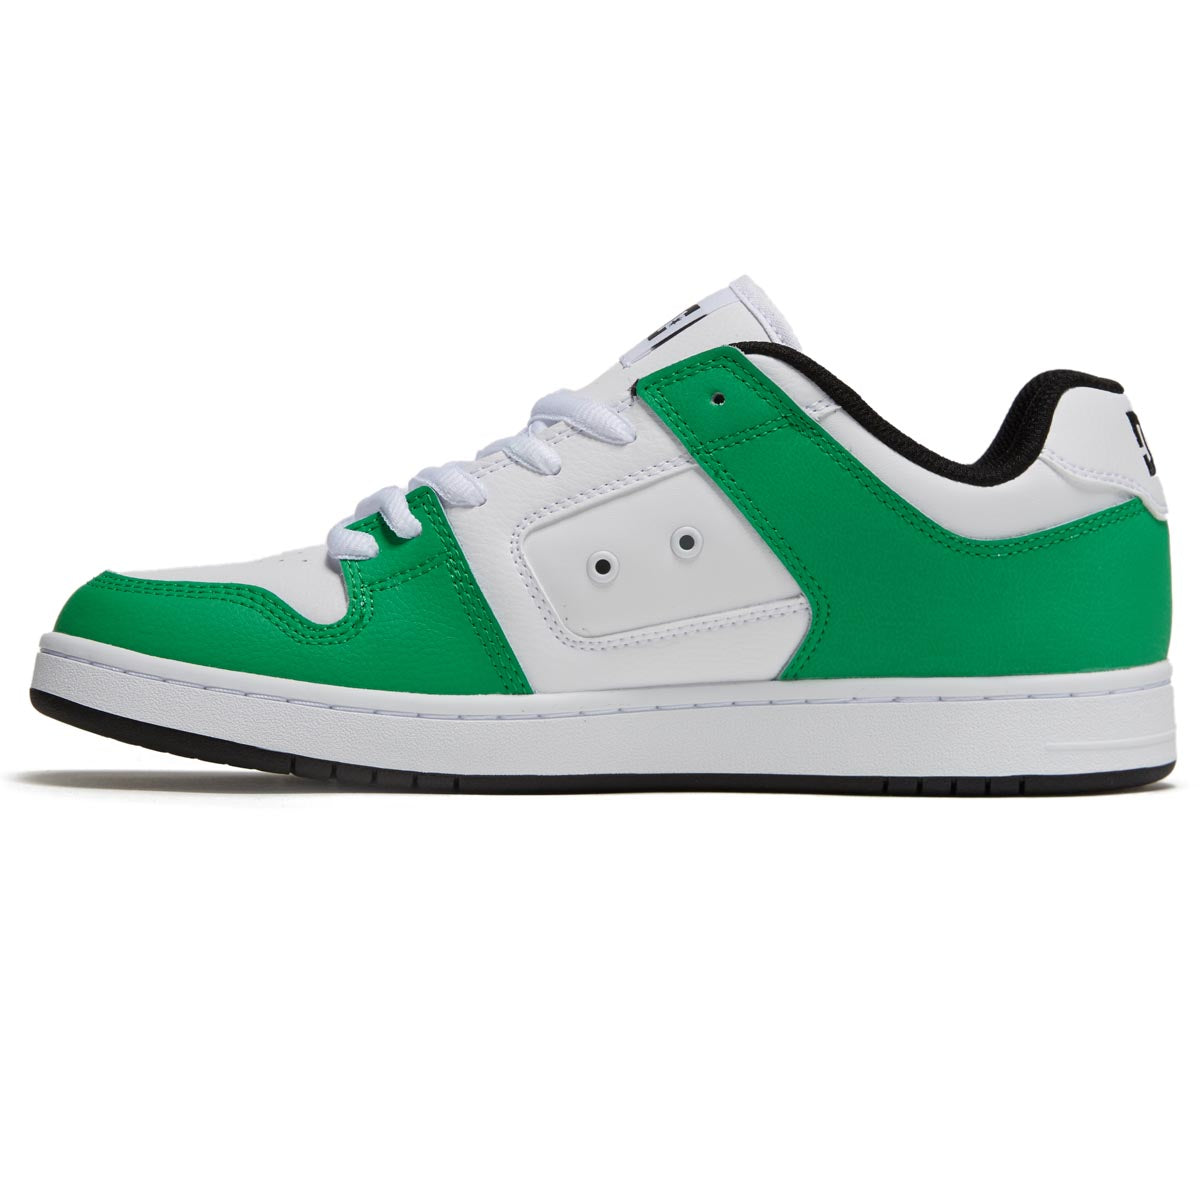 DC Manteca 4 Shoes - Green/White/Yellow image 2